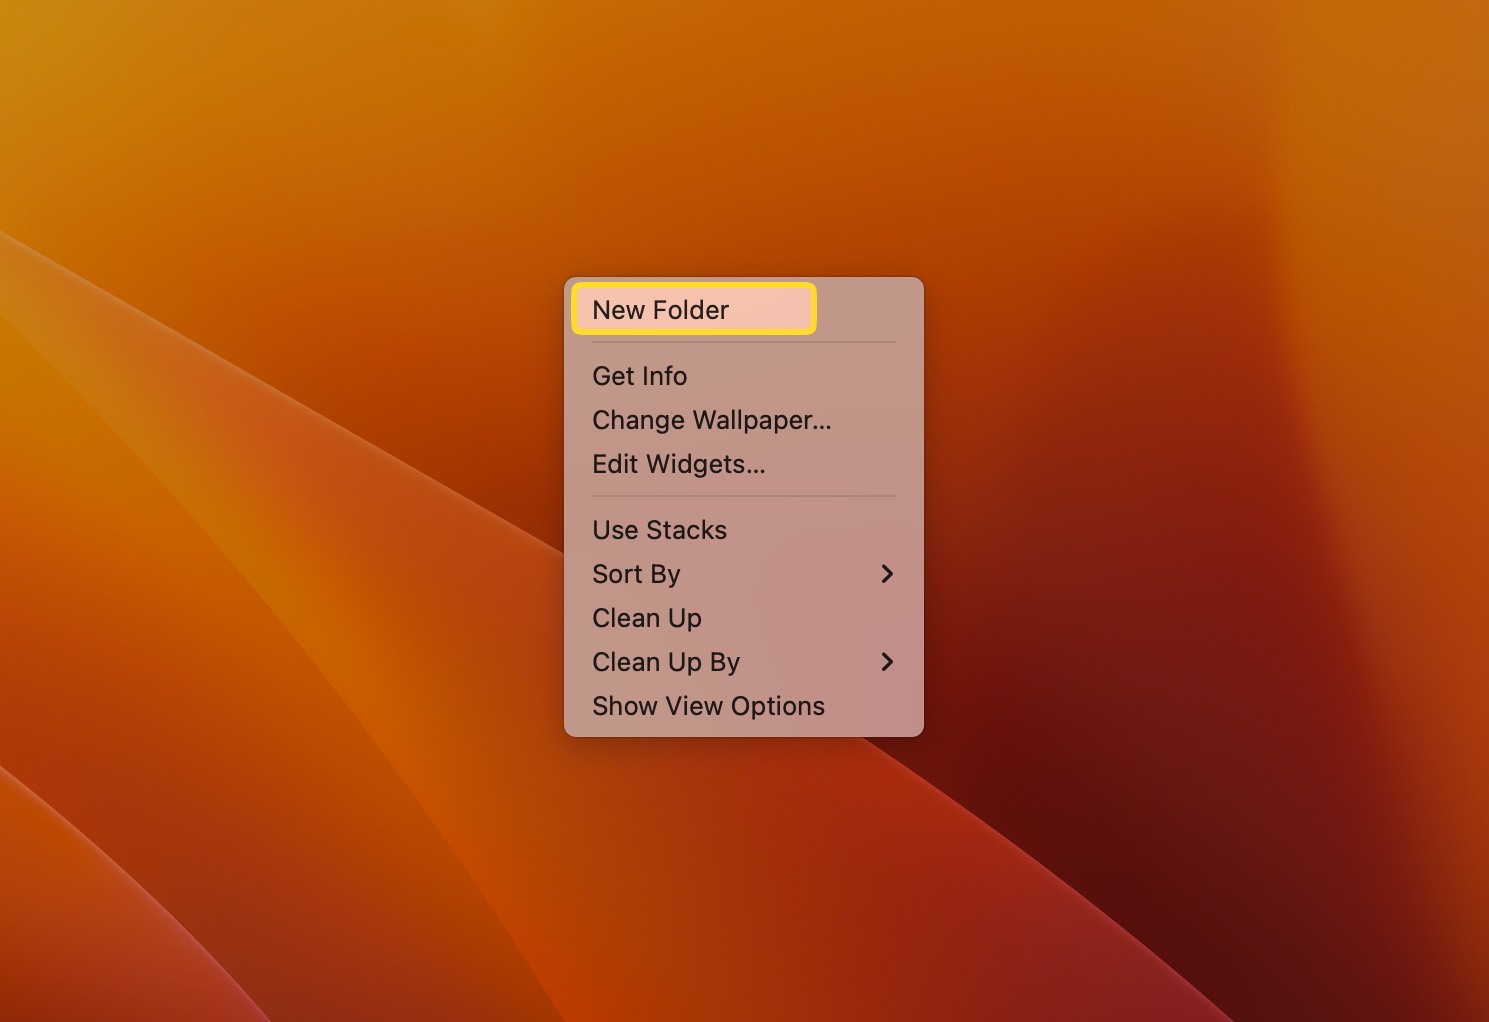 Select the New Folder option